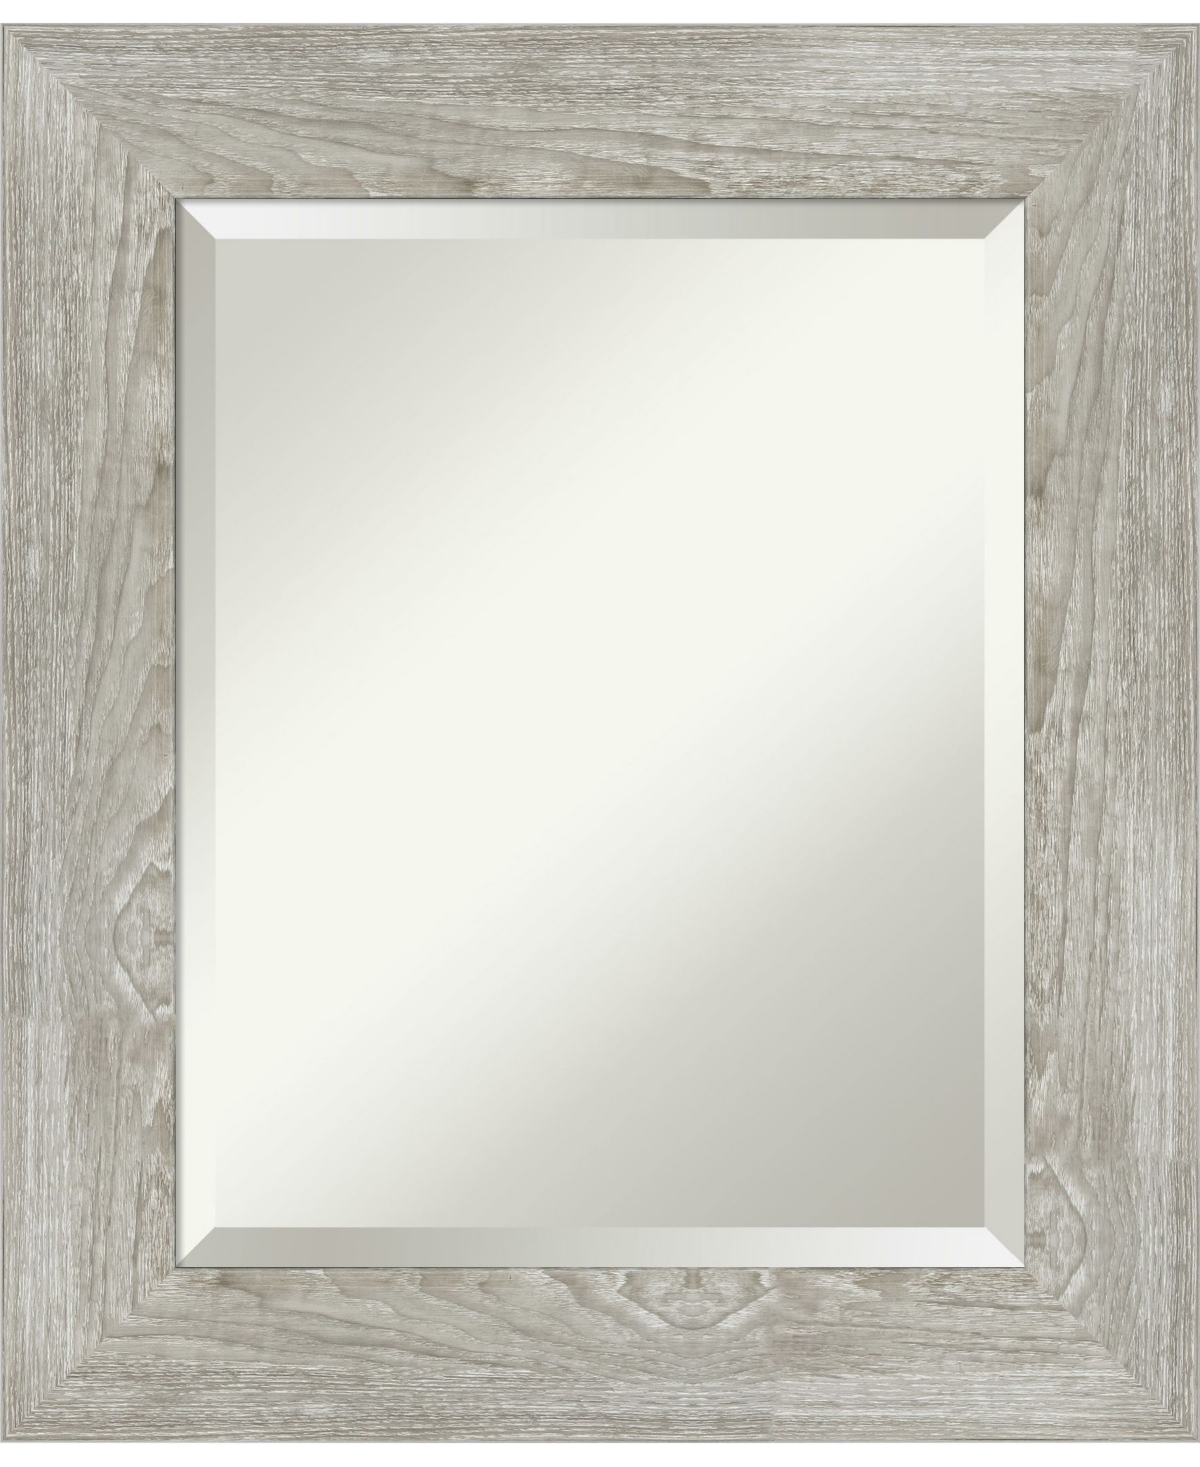 Dove Framed Bathroom Vanity Wall Mirror, 21.88" x 25.88" - Gray